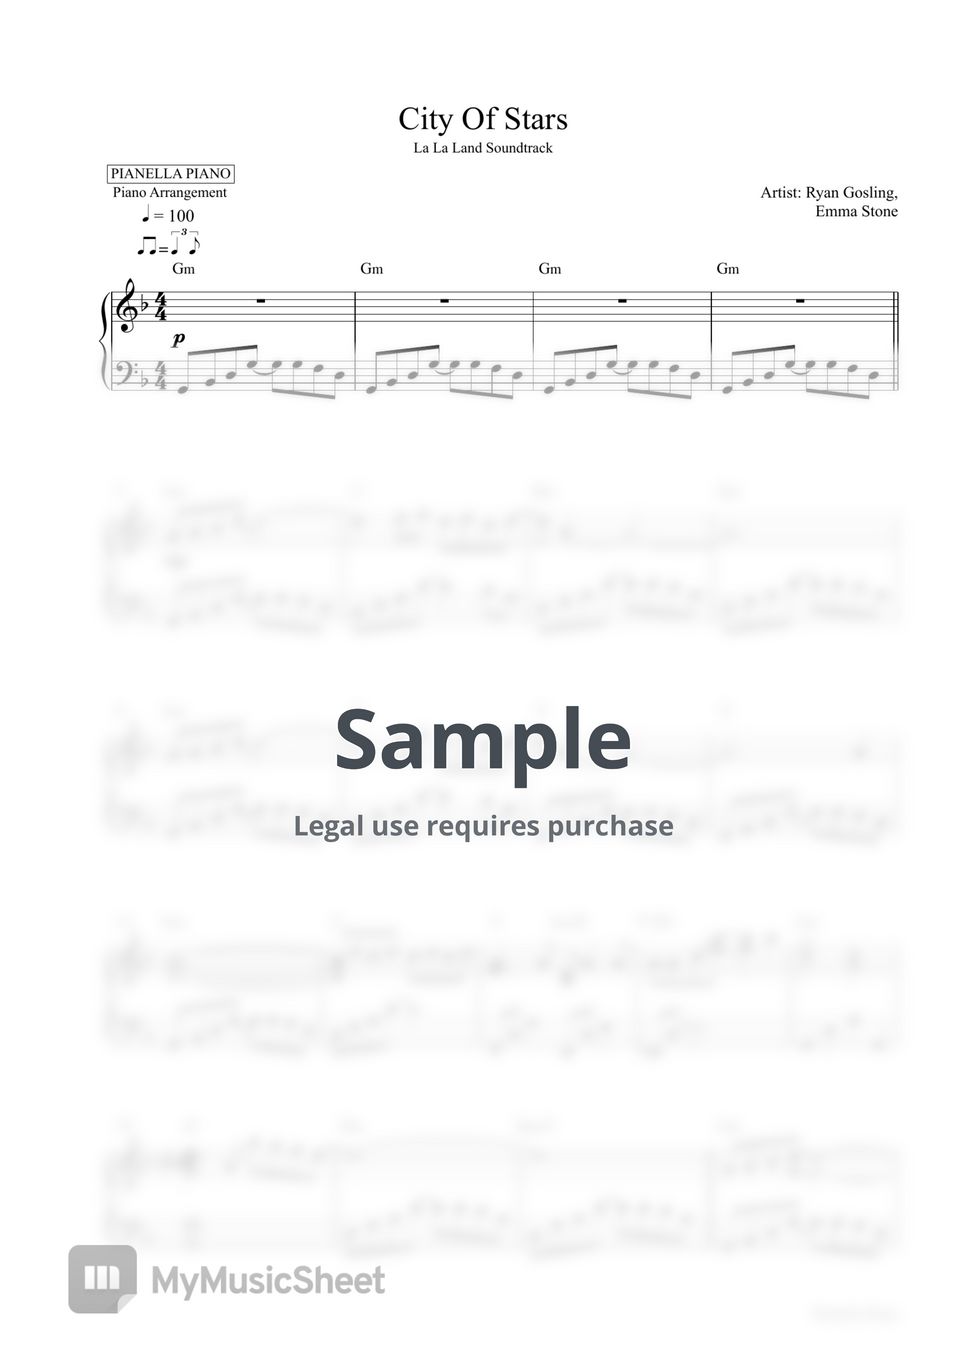 La La Land - City of Stars (Piano Sheet) by Pianella Piano